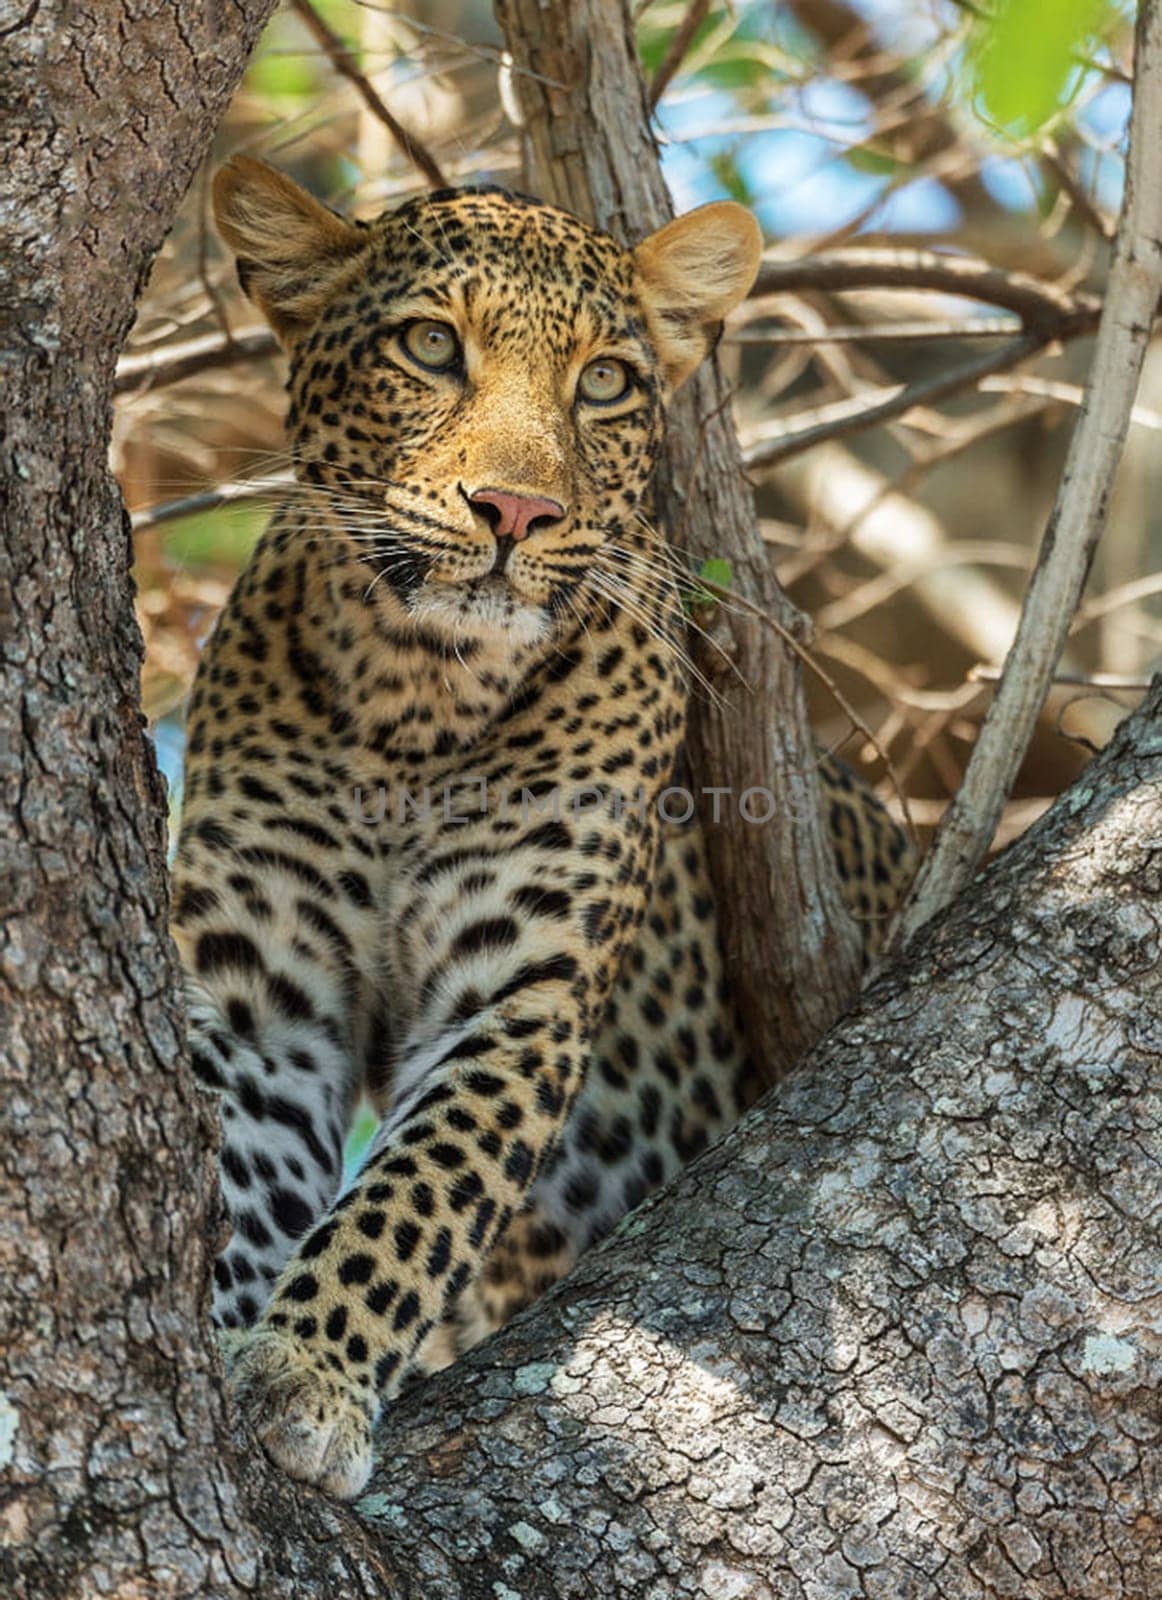 Creative Luangwa, Zambia wildlife pictures